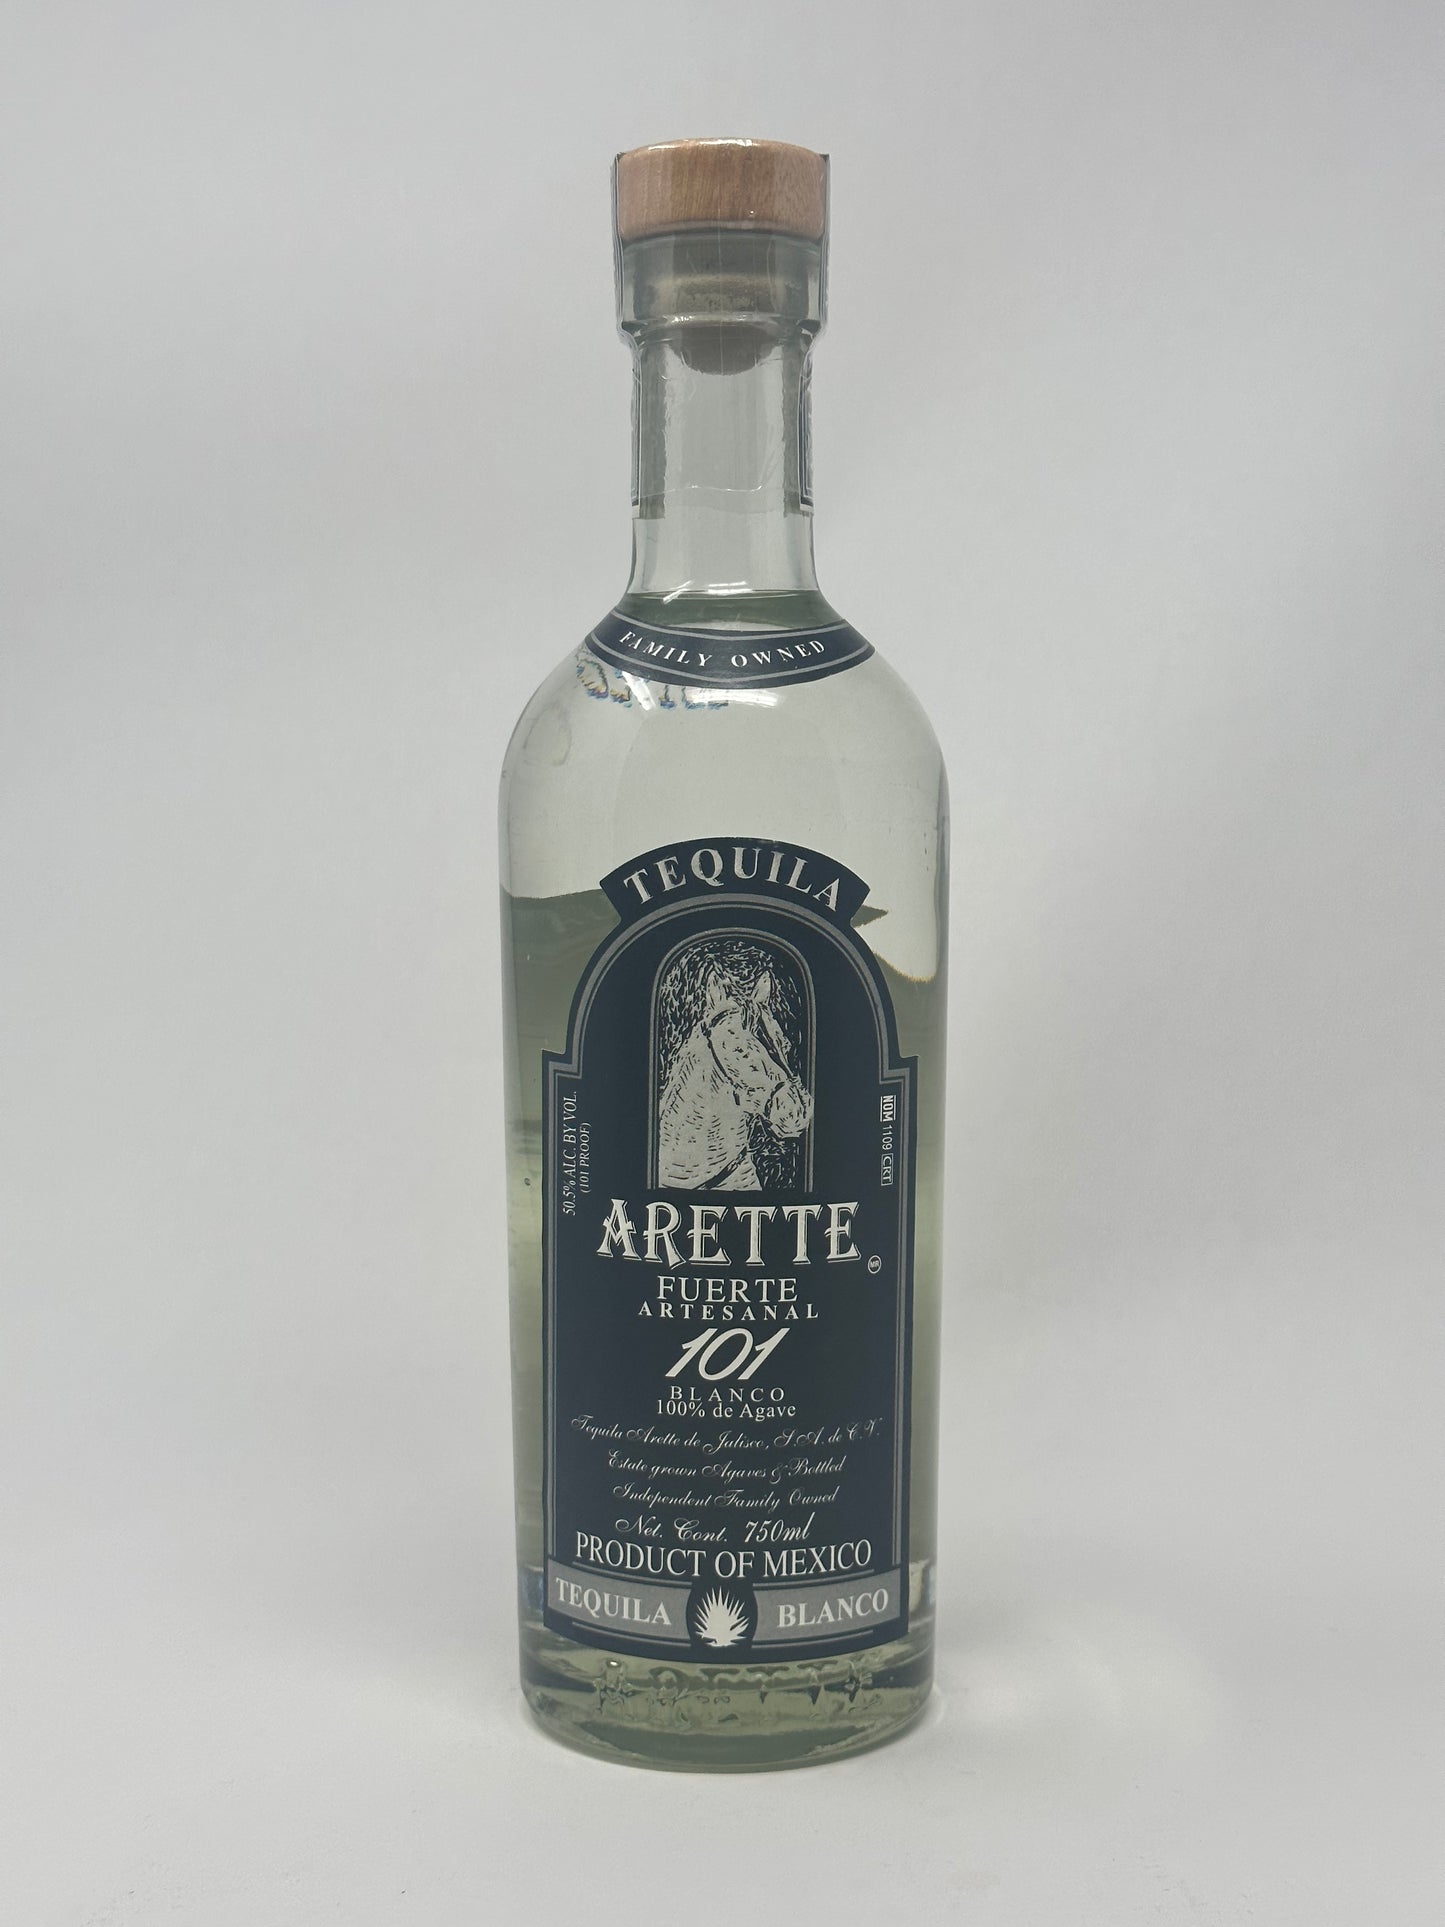 Tequila Arette, Arette Artesenal Suave Fuerte Blanco Tequila 100% de Agave 101 Proof 750 mL